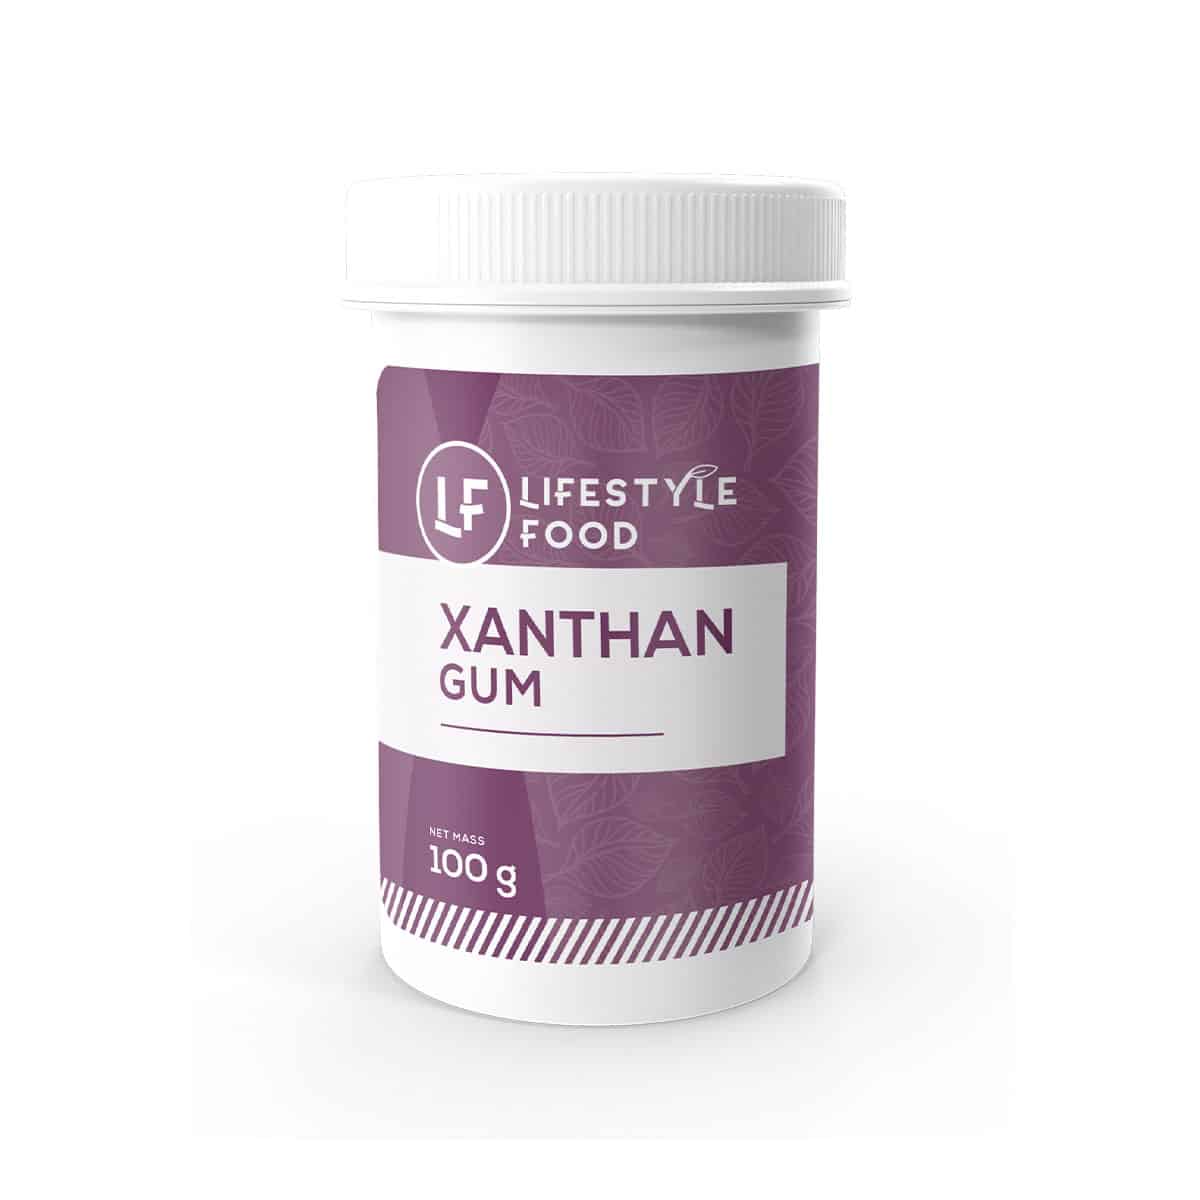 Lifestyle Food Xanthan Gum - 100g